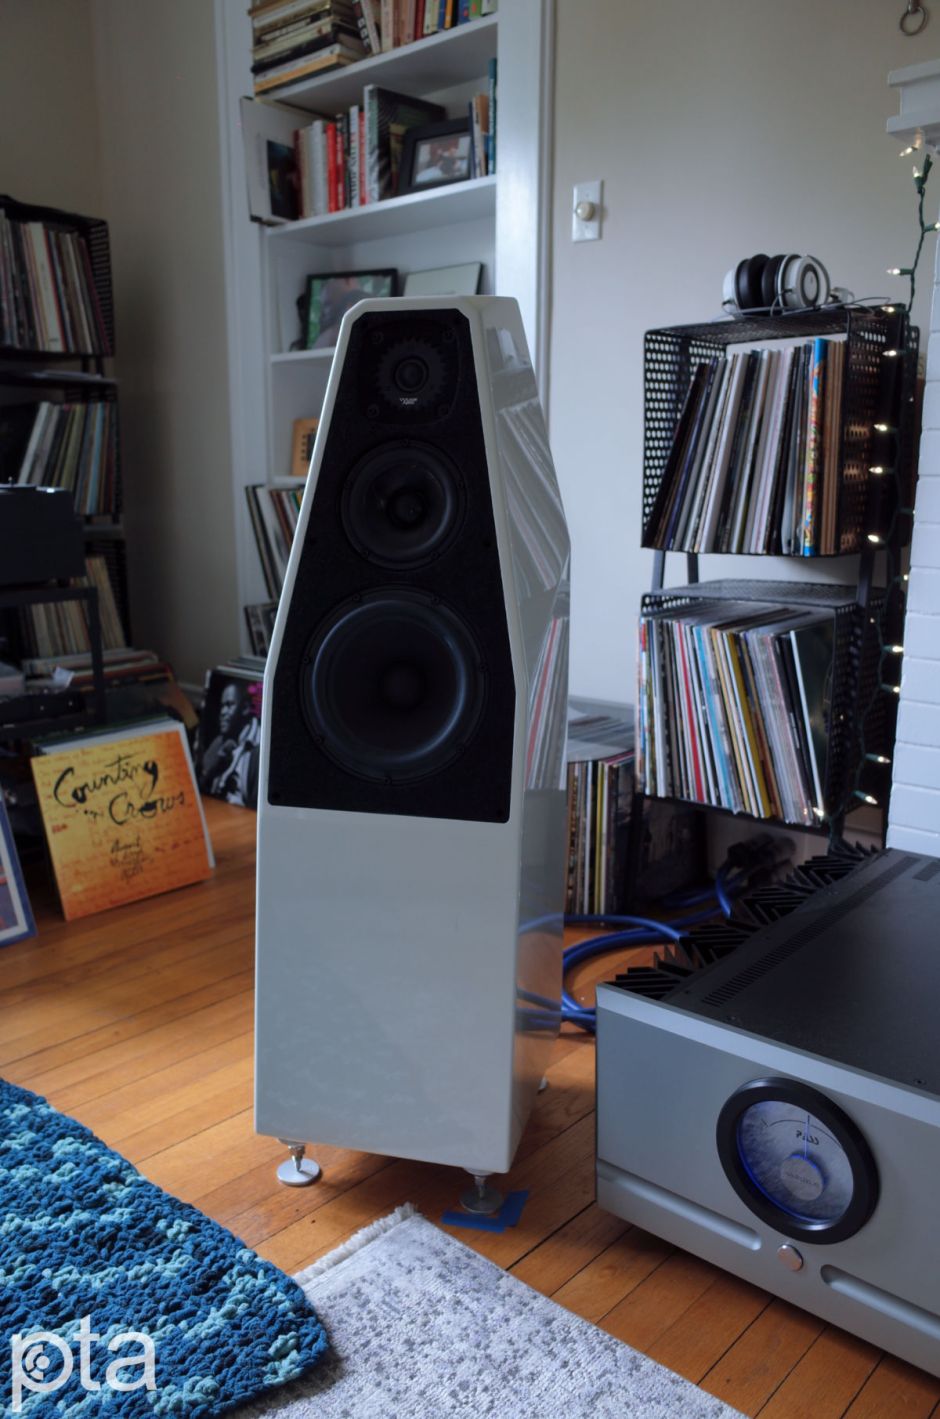 floorstanding speakers